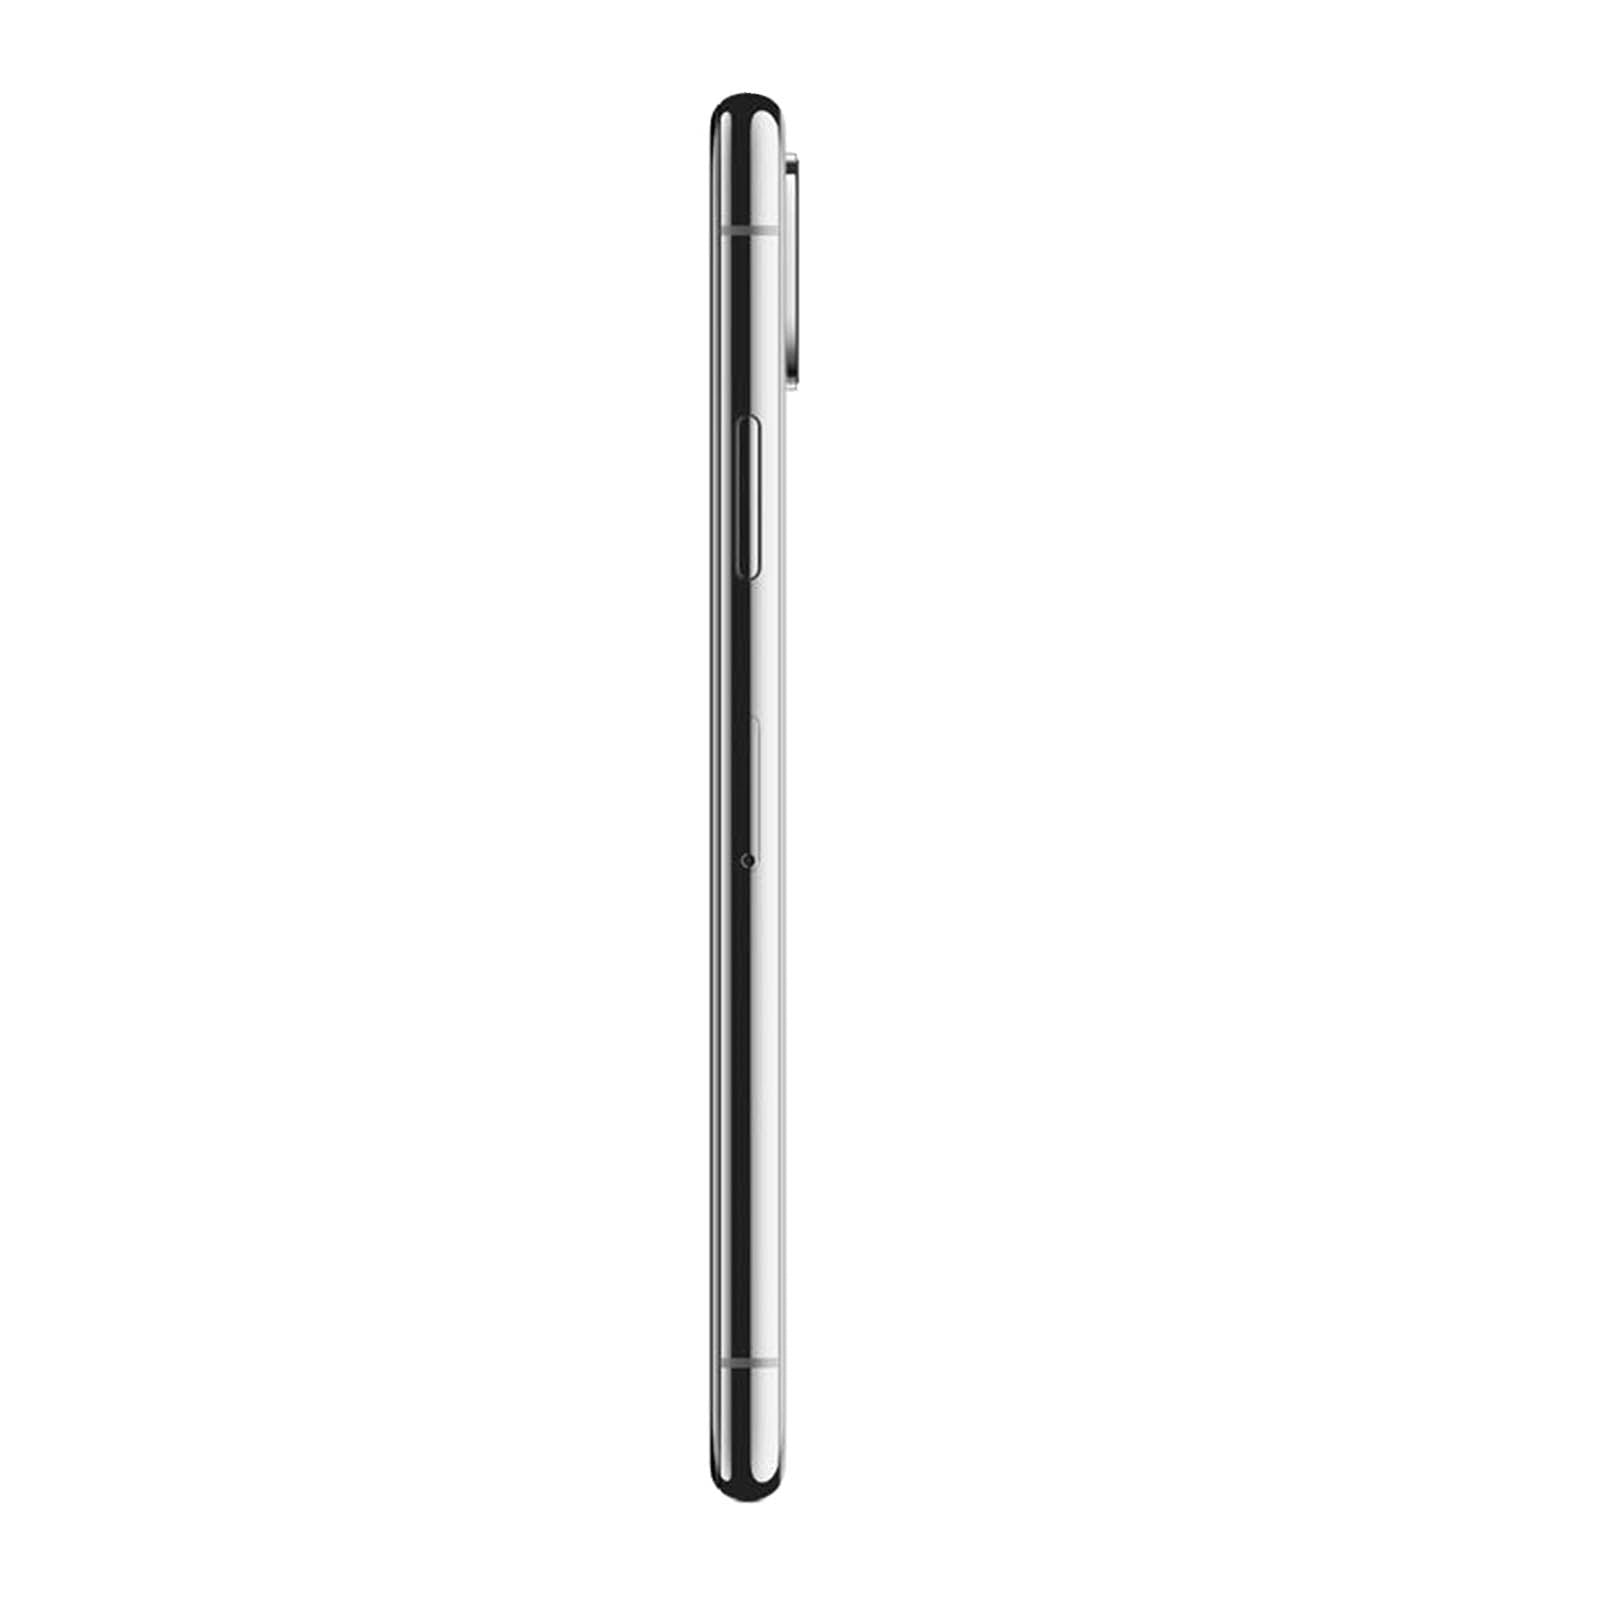 Apple iPhone XS 64GB Space Grey Good - Verizon